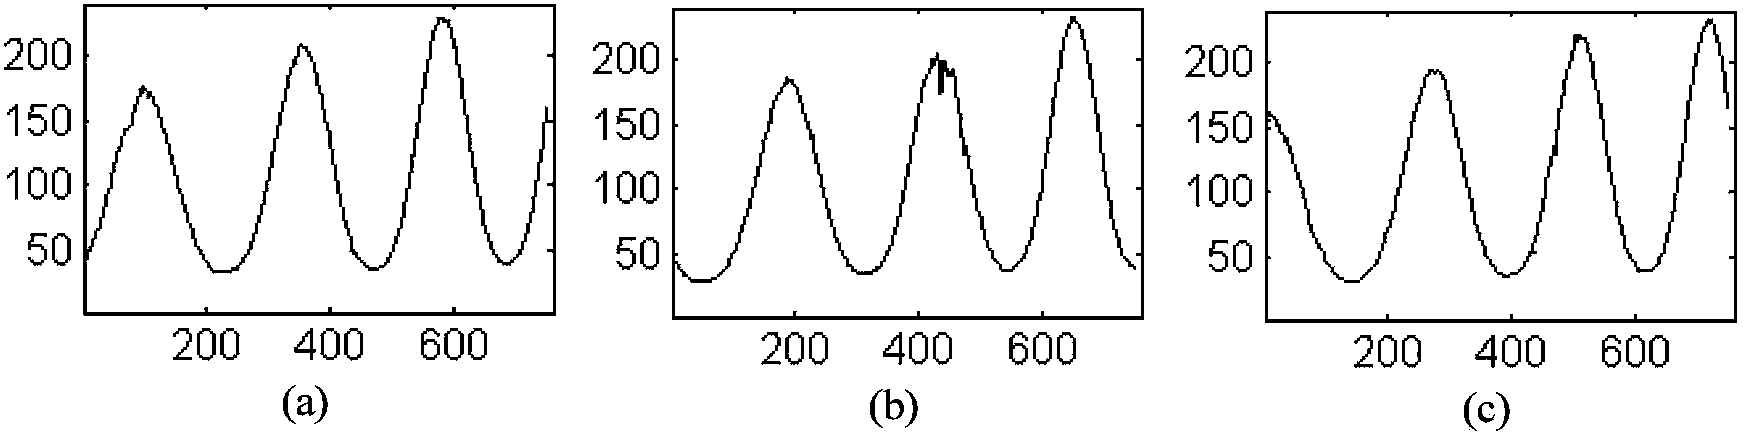 Gray fringe projection light intensity nonlinear correction method and phase correction method based on method